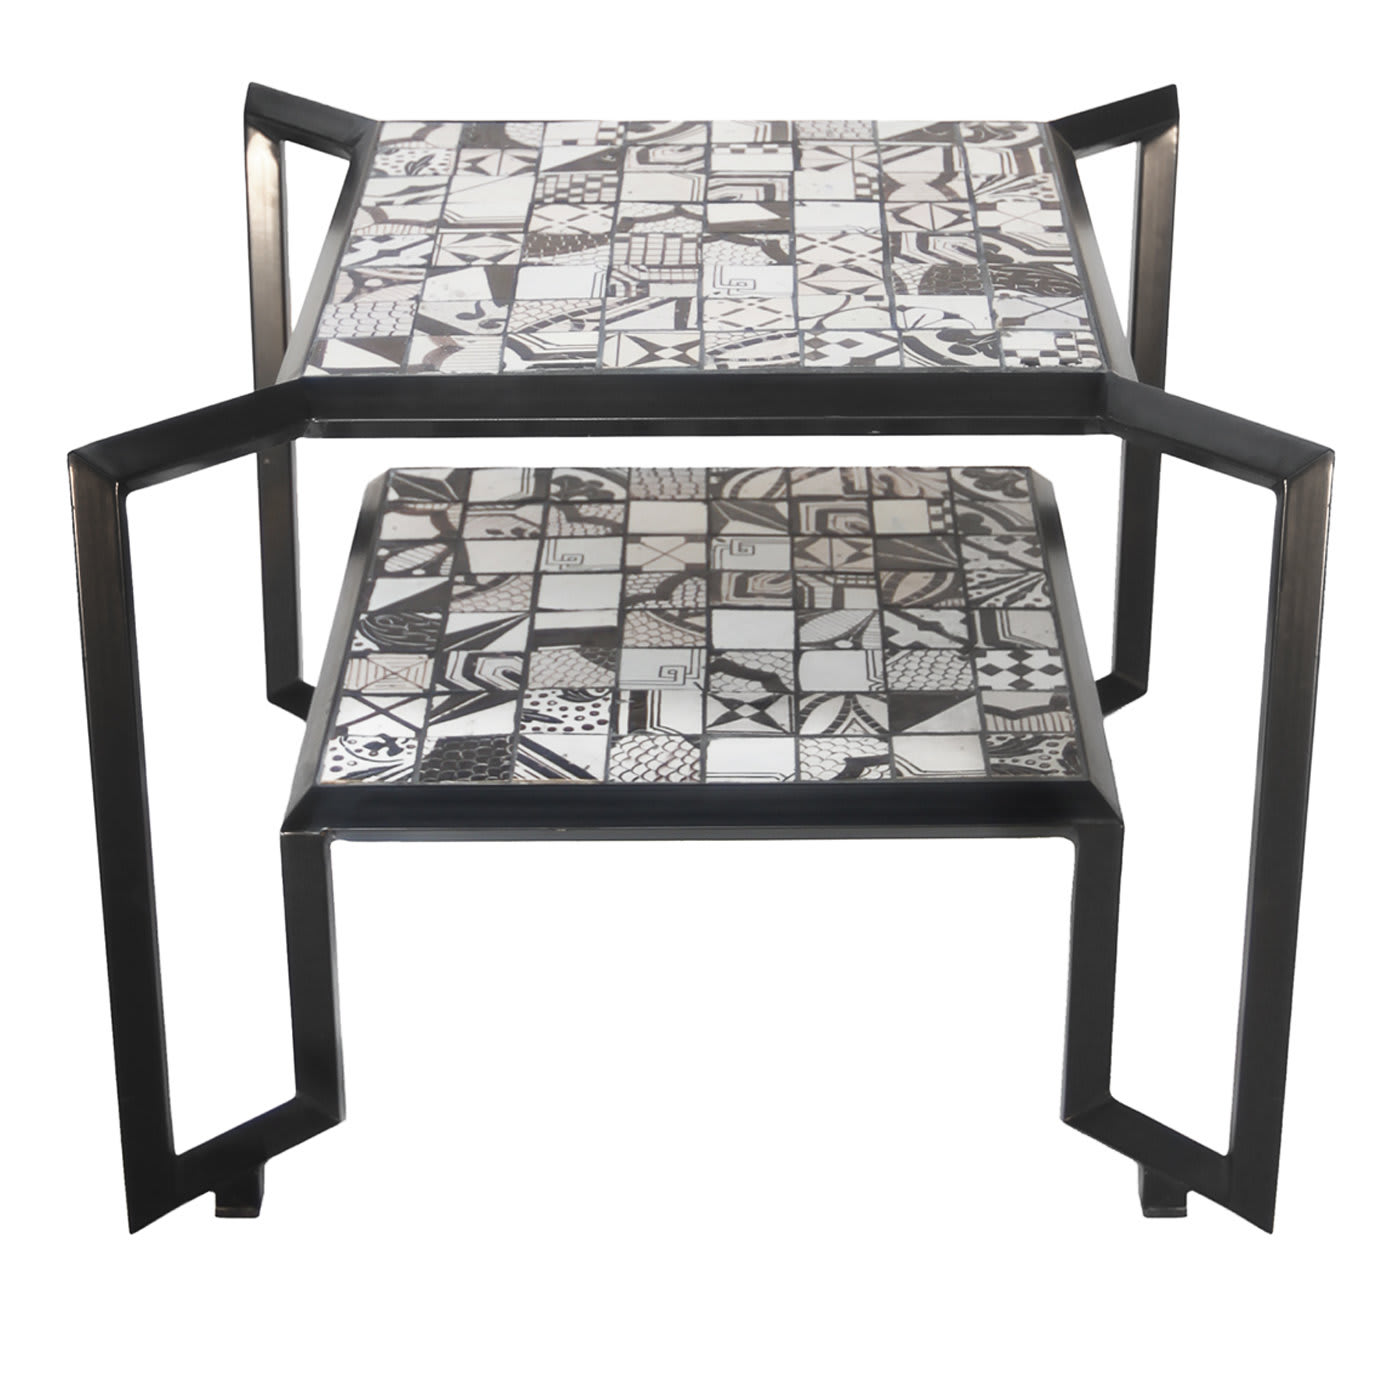 Black and White Spider Mosaic Tile Table - Francesco Della Femina